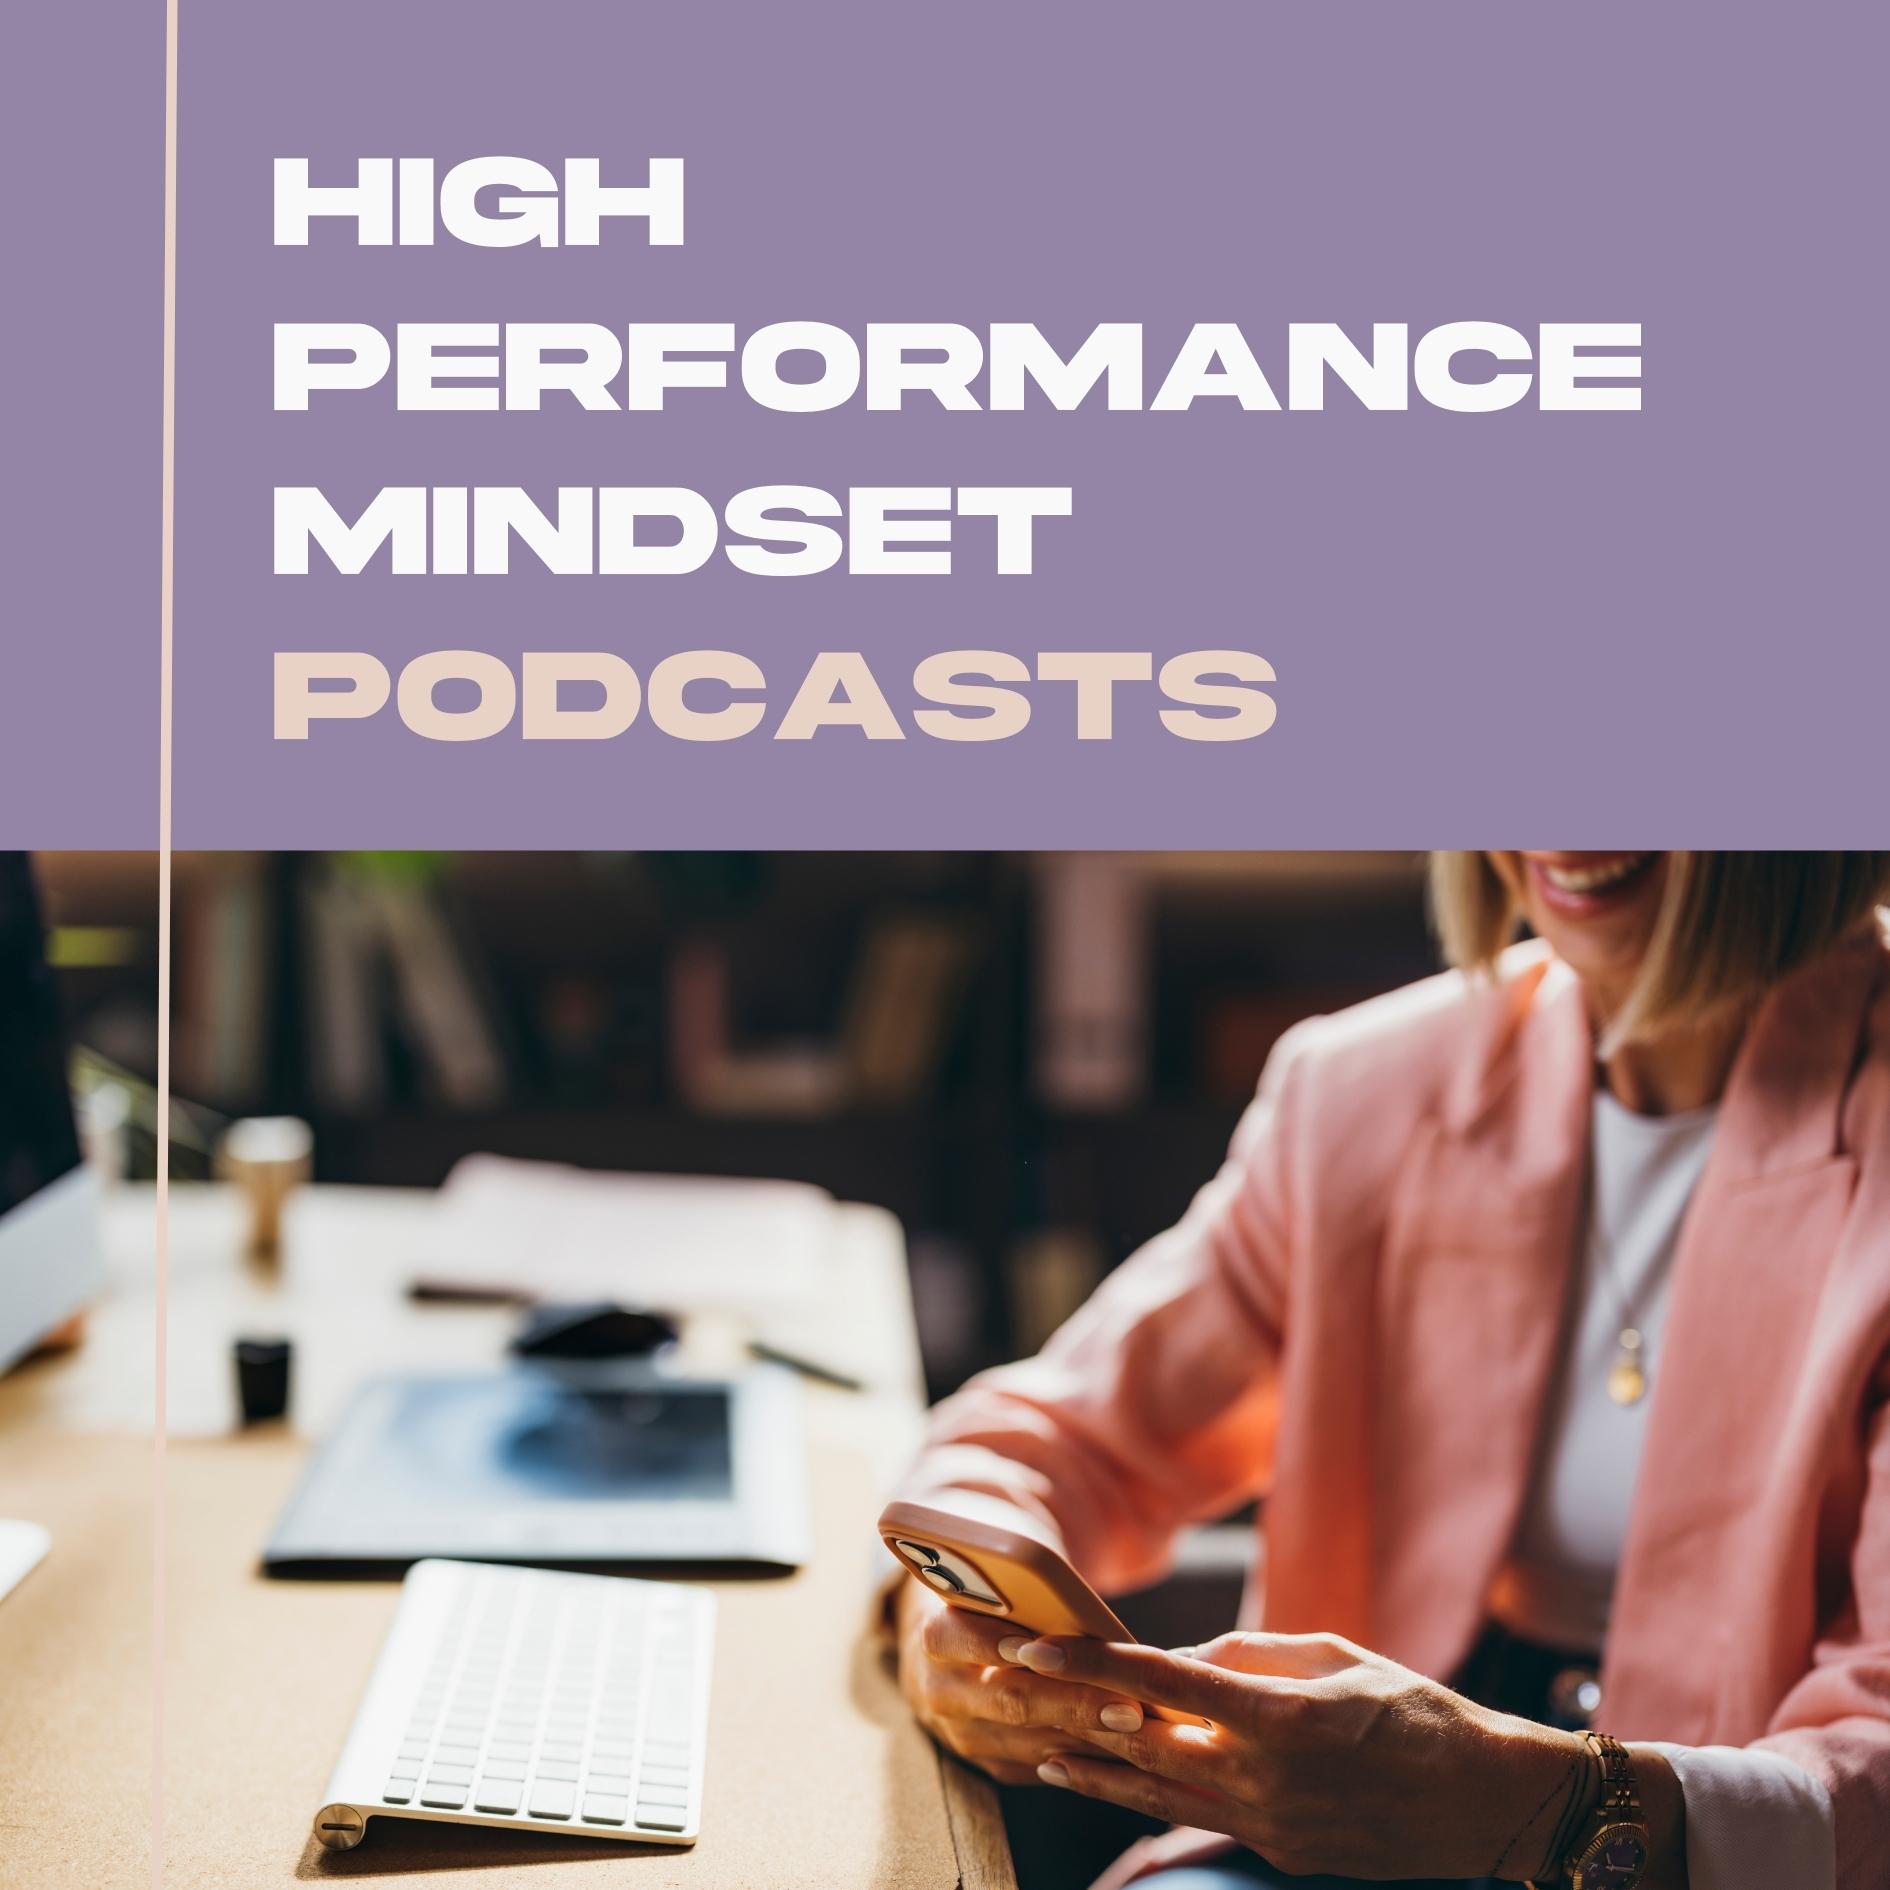 High-Performance Mindset Podcasts